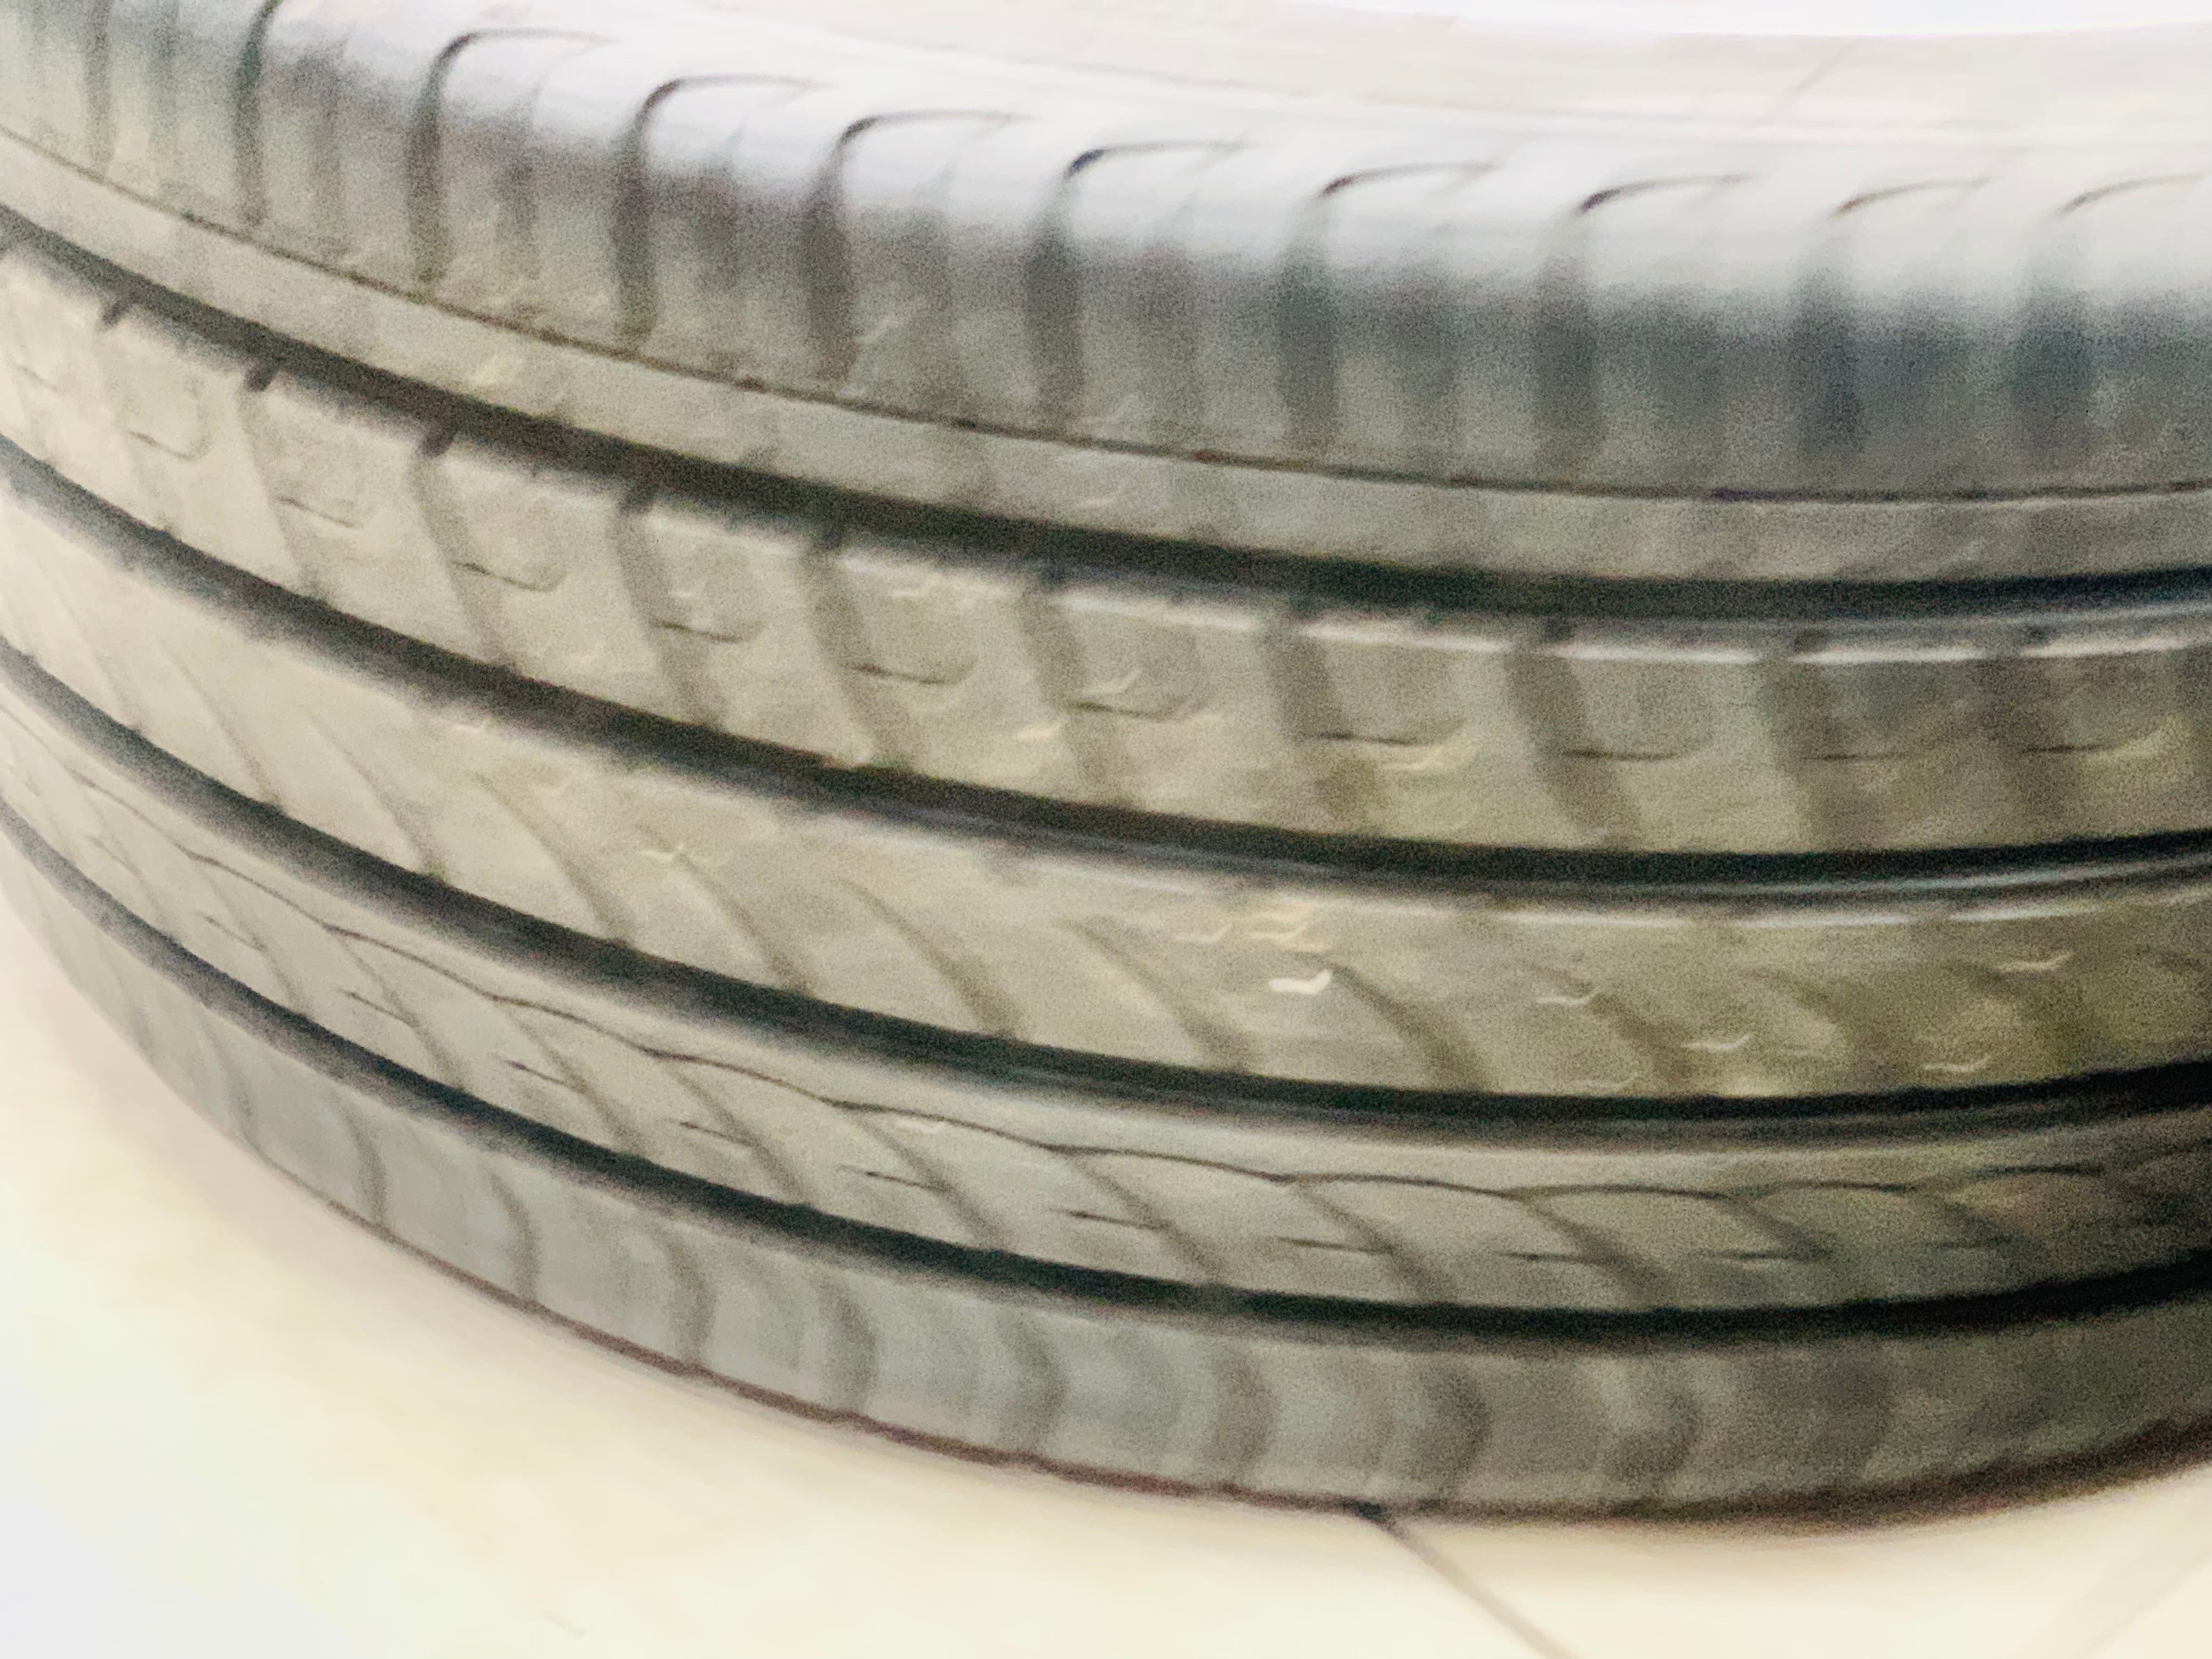 CHEV LUMINA SSV PREOWNED chrome rims & tyres